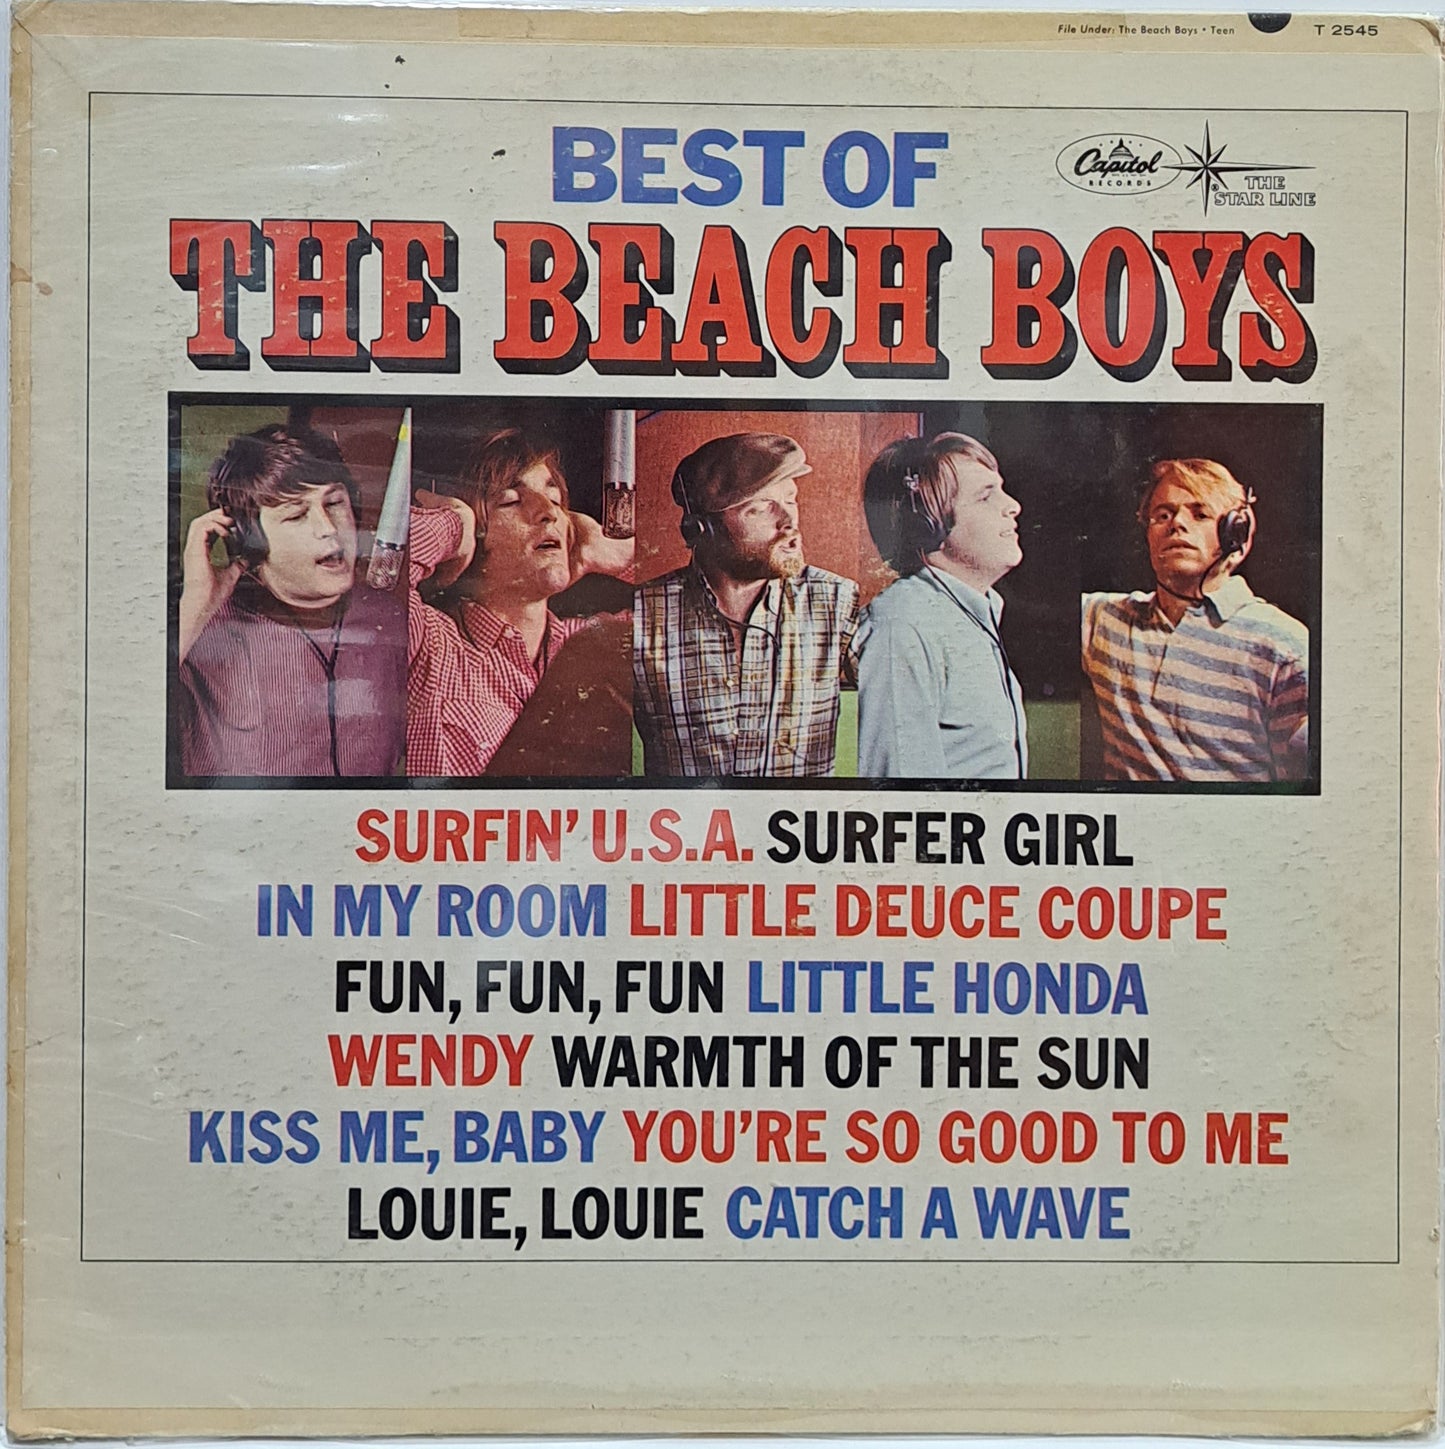 THE BEACH BOYS - BEST OF LP